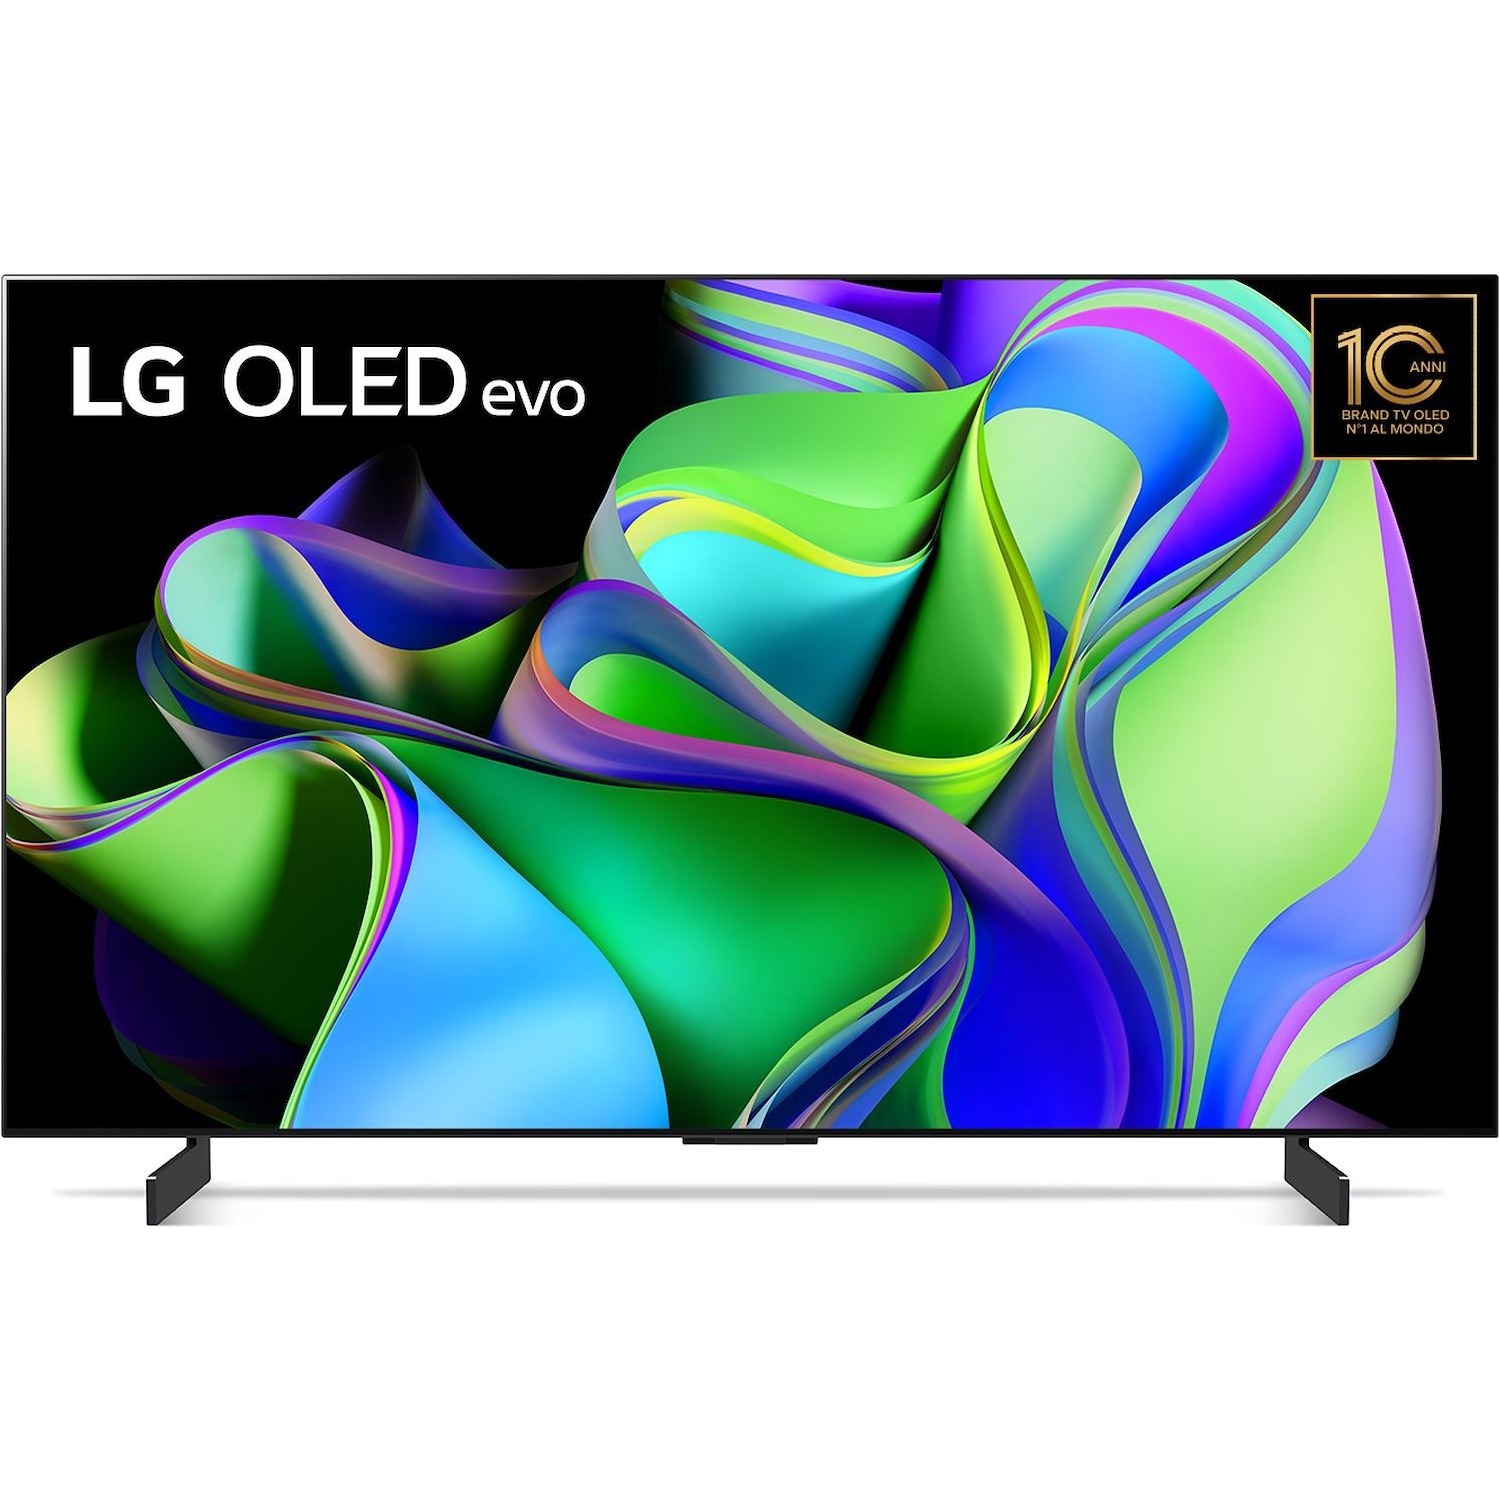 Immagine per TV OLED UHD 4K Smart LG OLED42C34 da DIMOStore